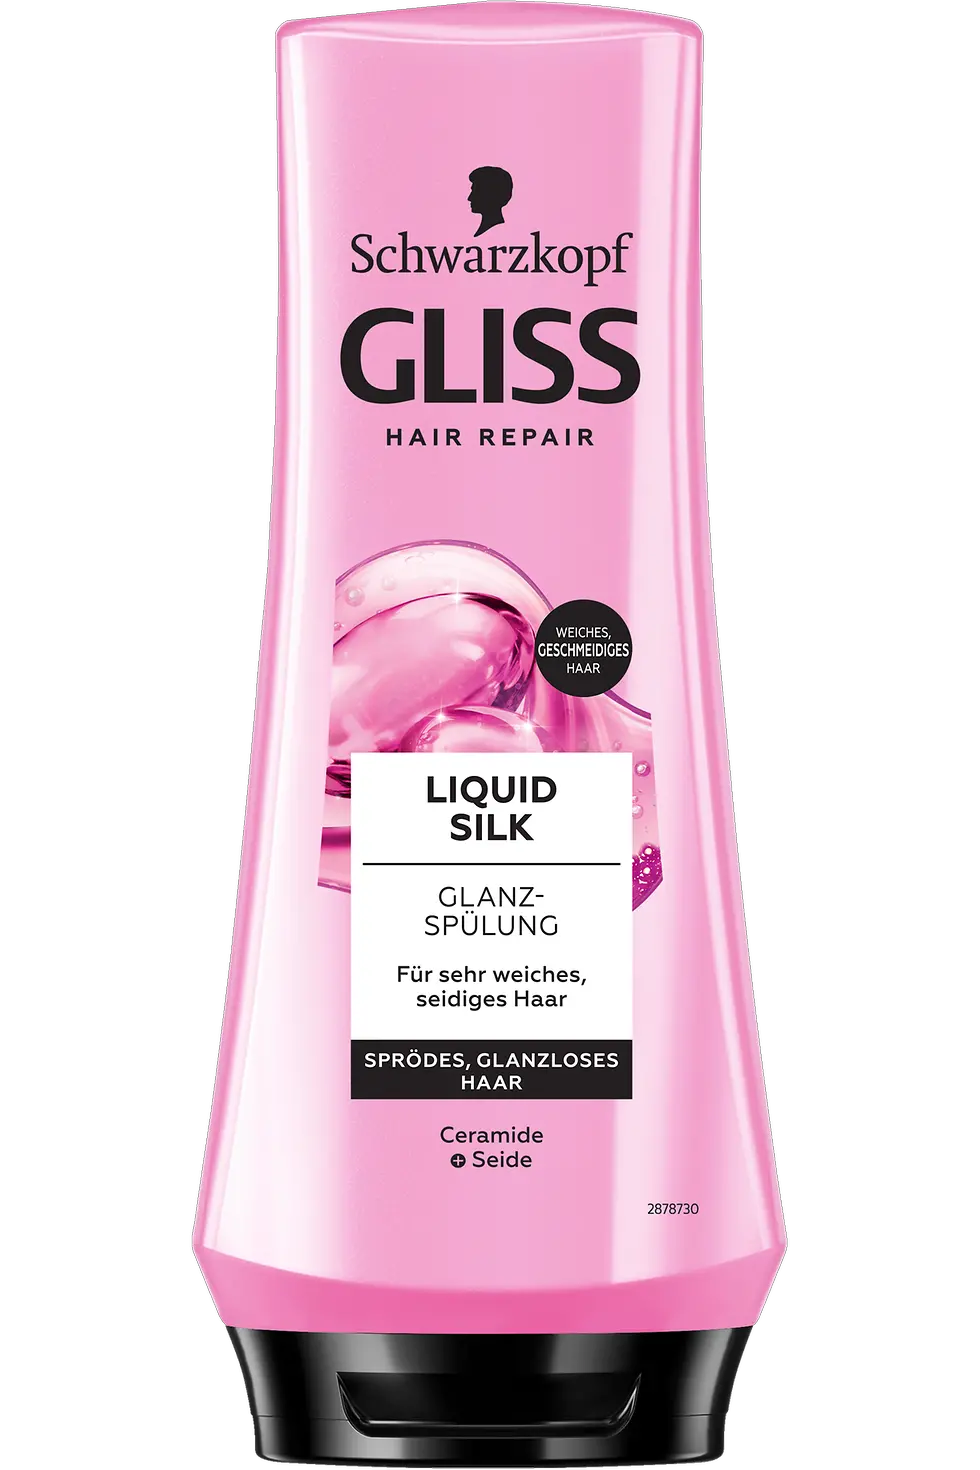 
Gliss Spülung Liquid Silk